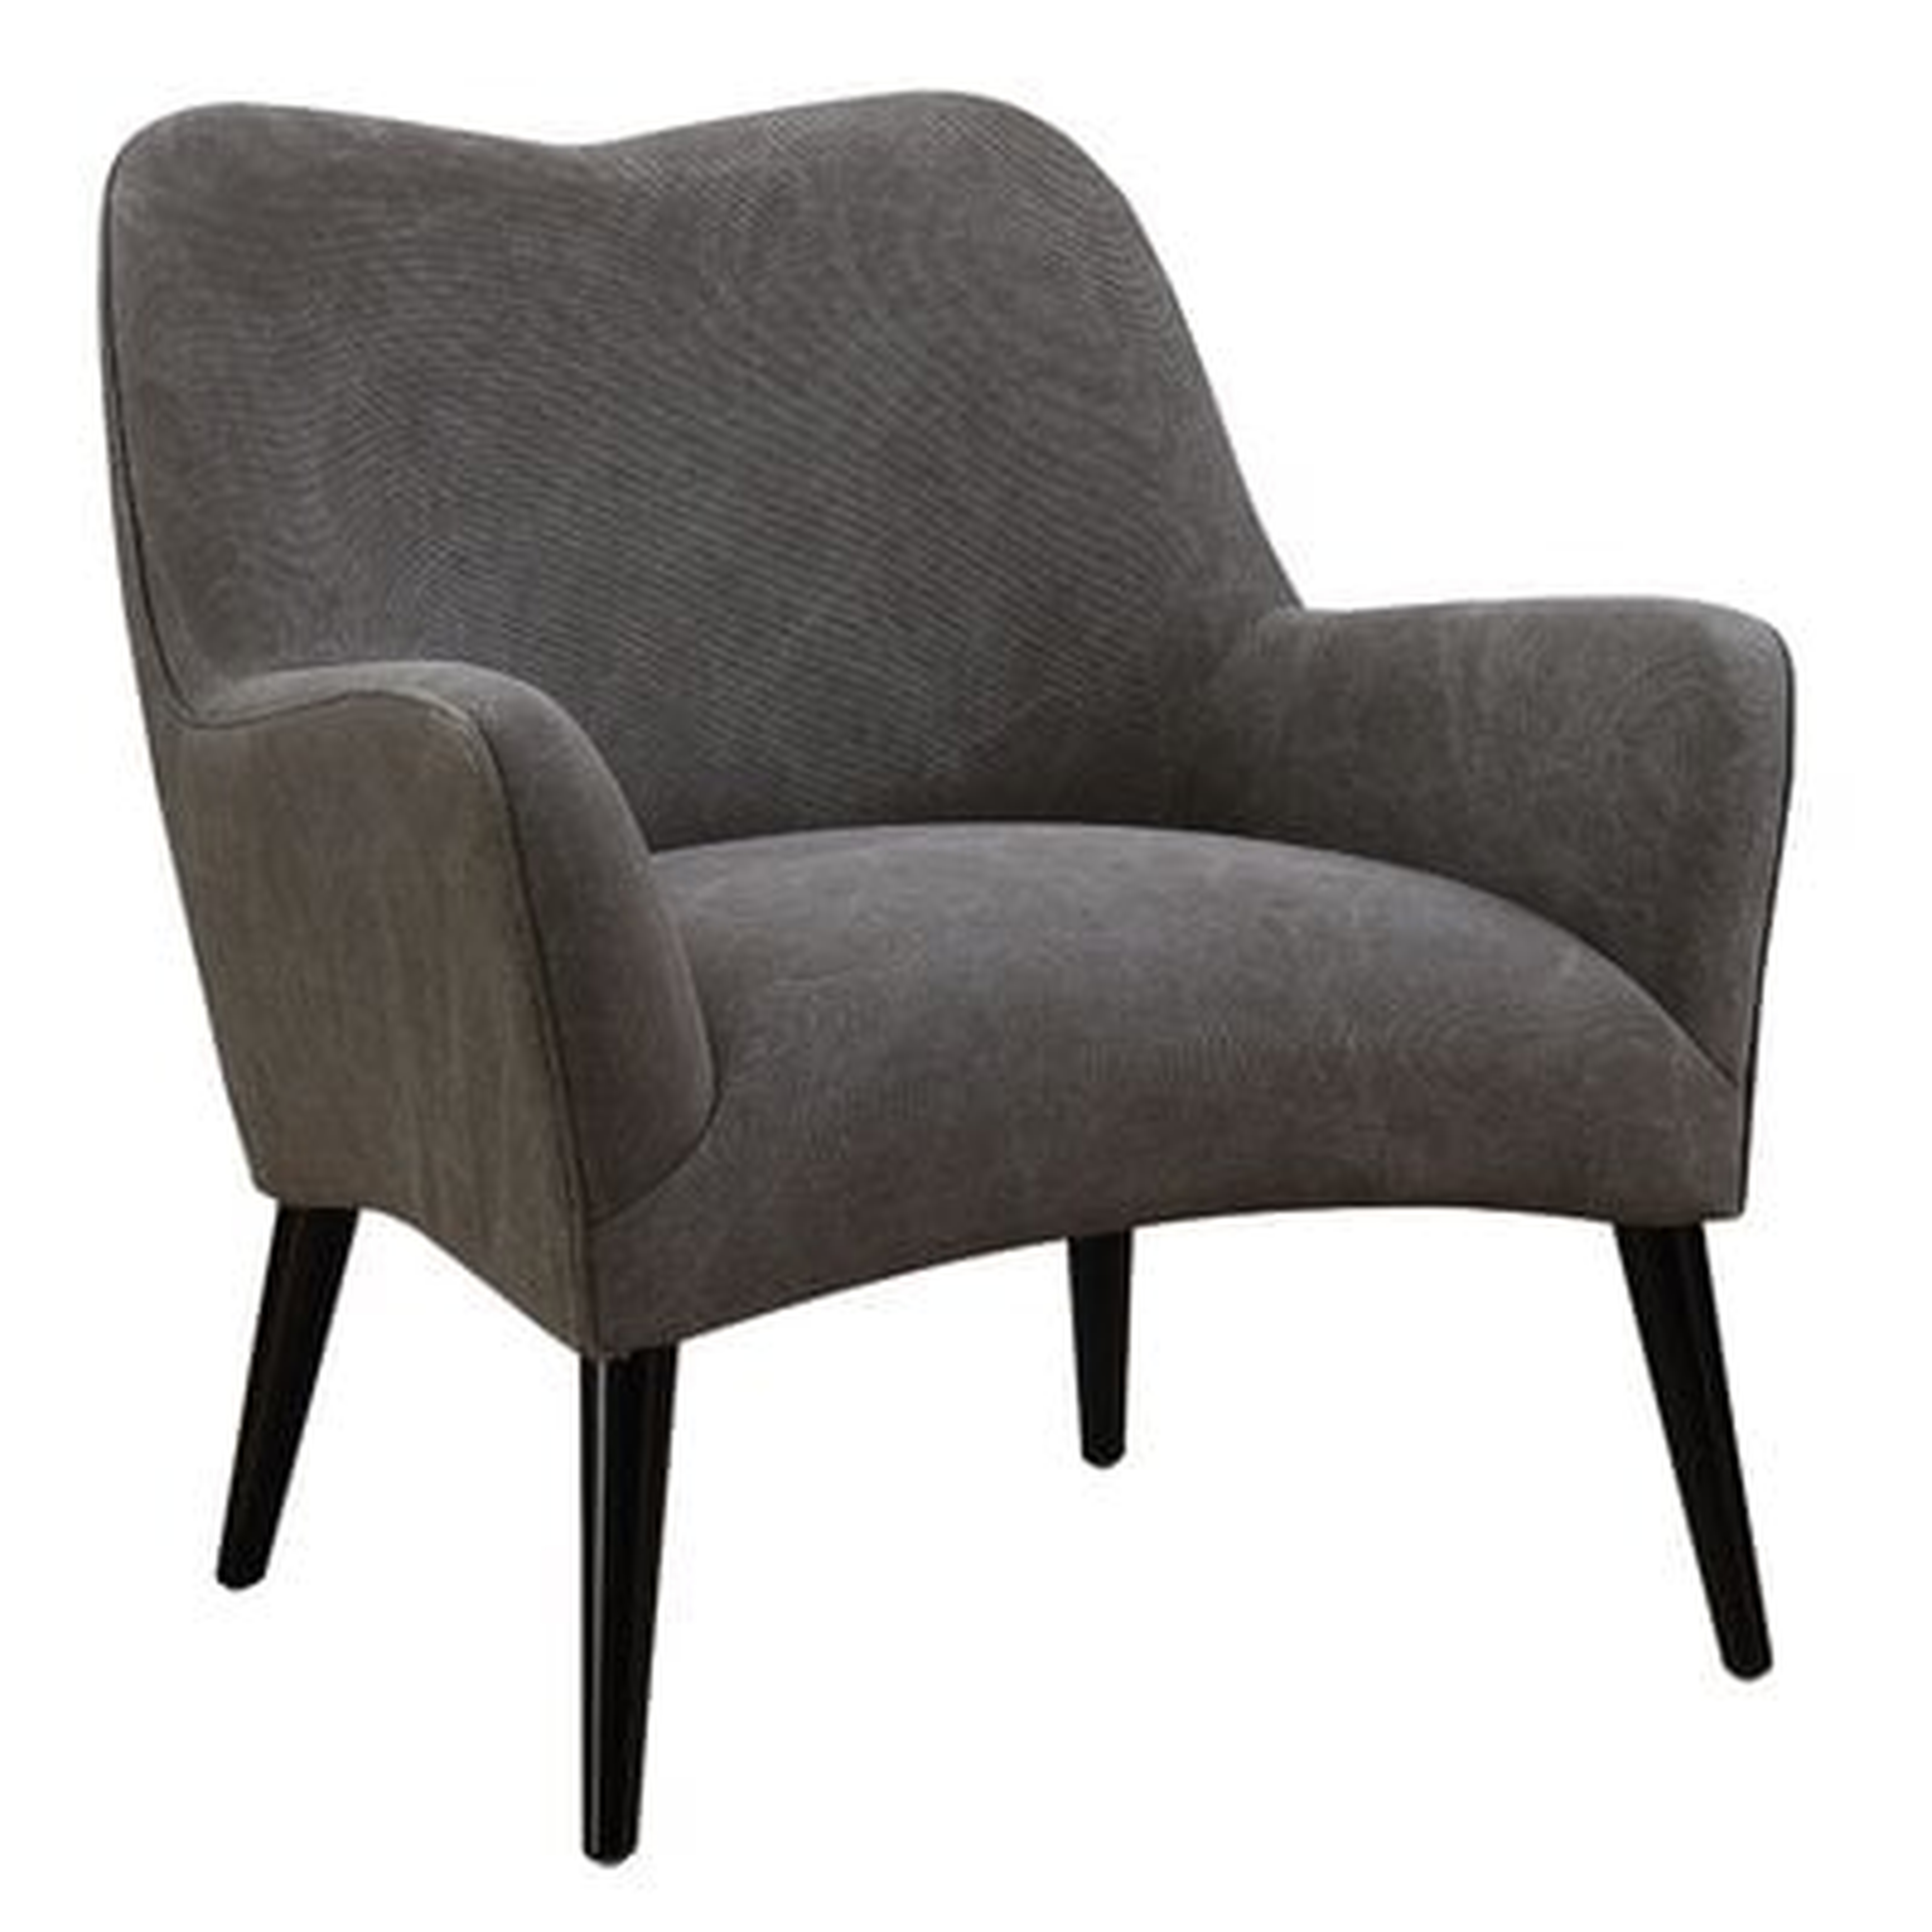 Hosmer Mid-Century Modern Accent Chair - Wayfair